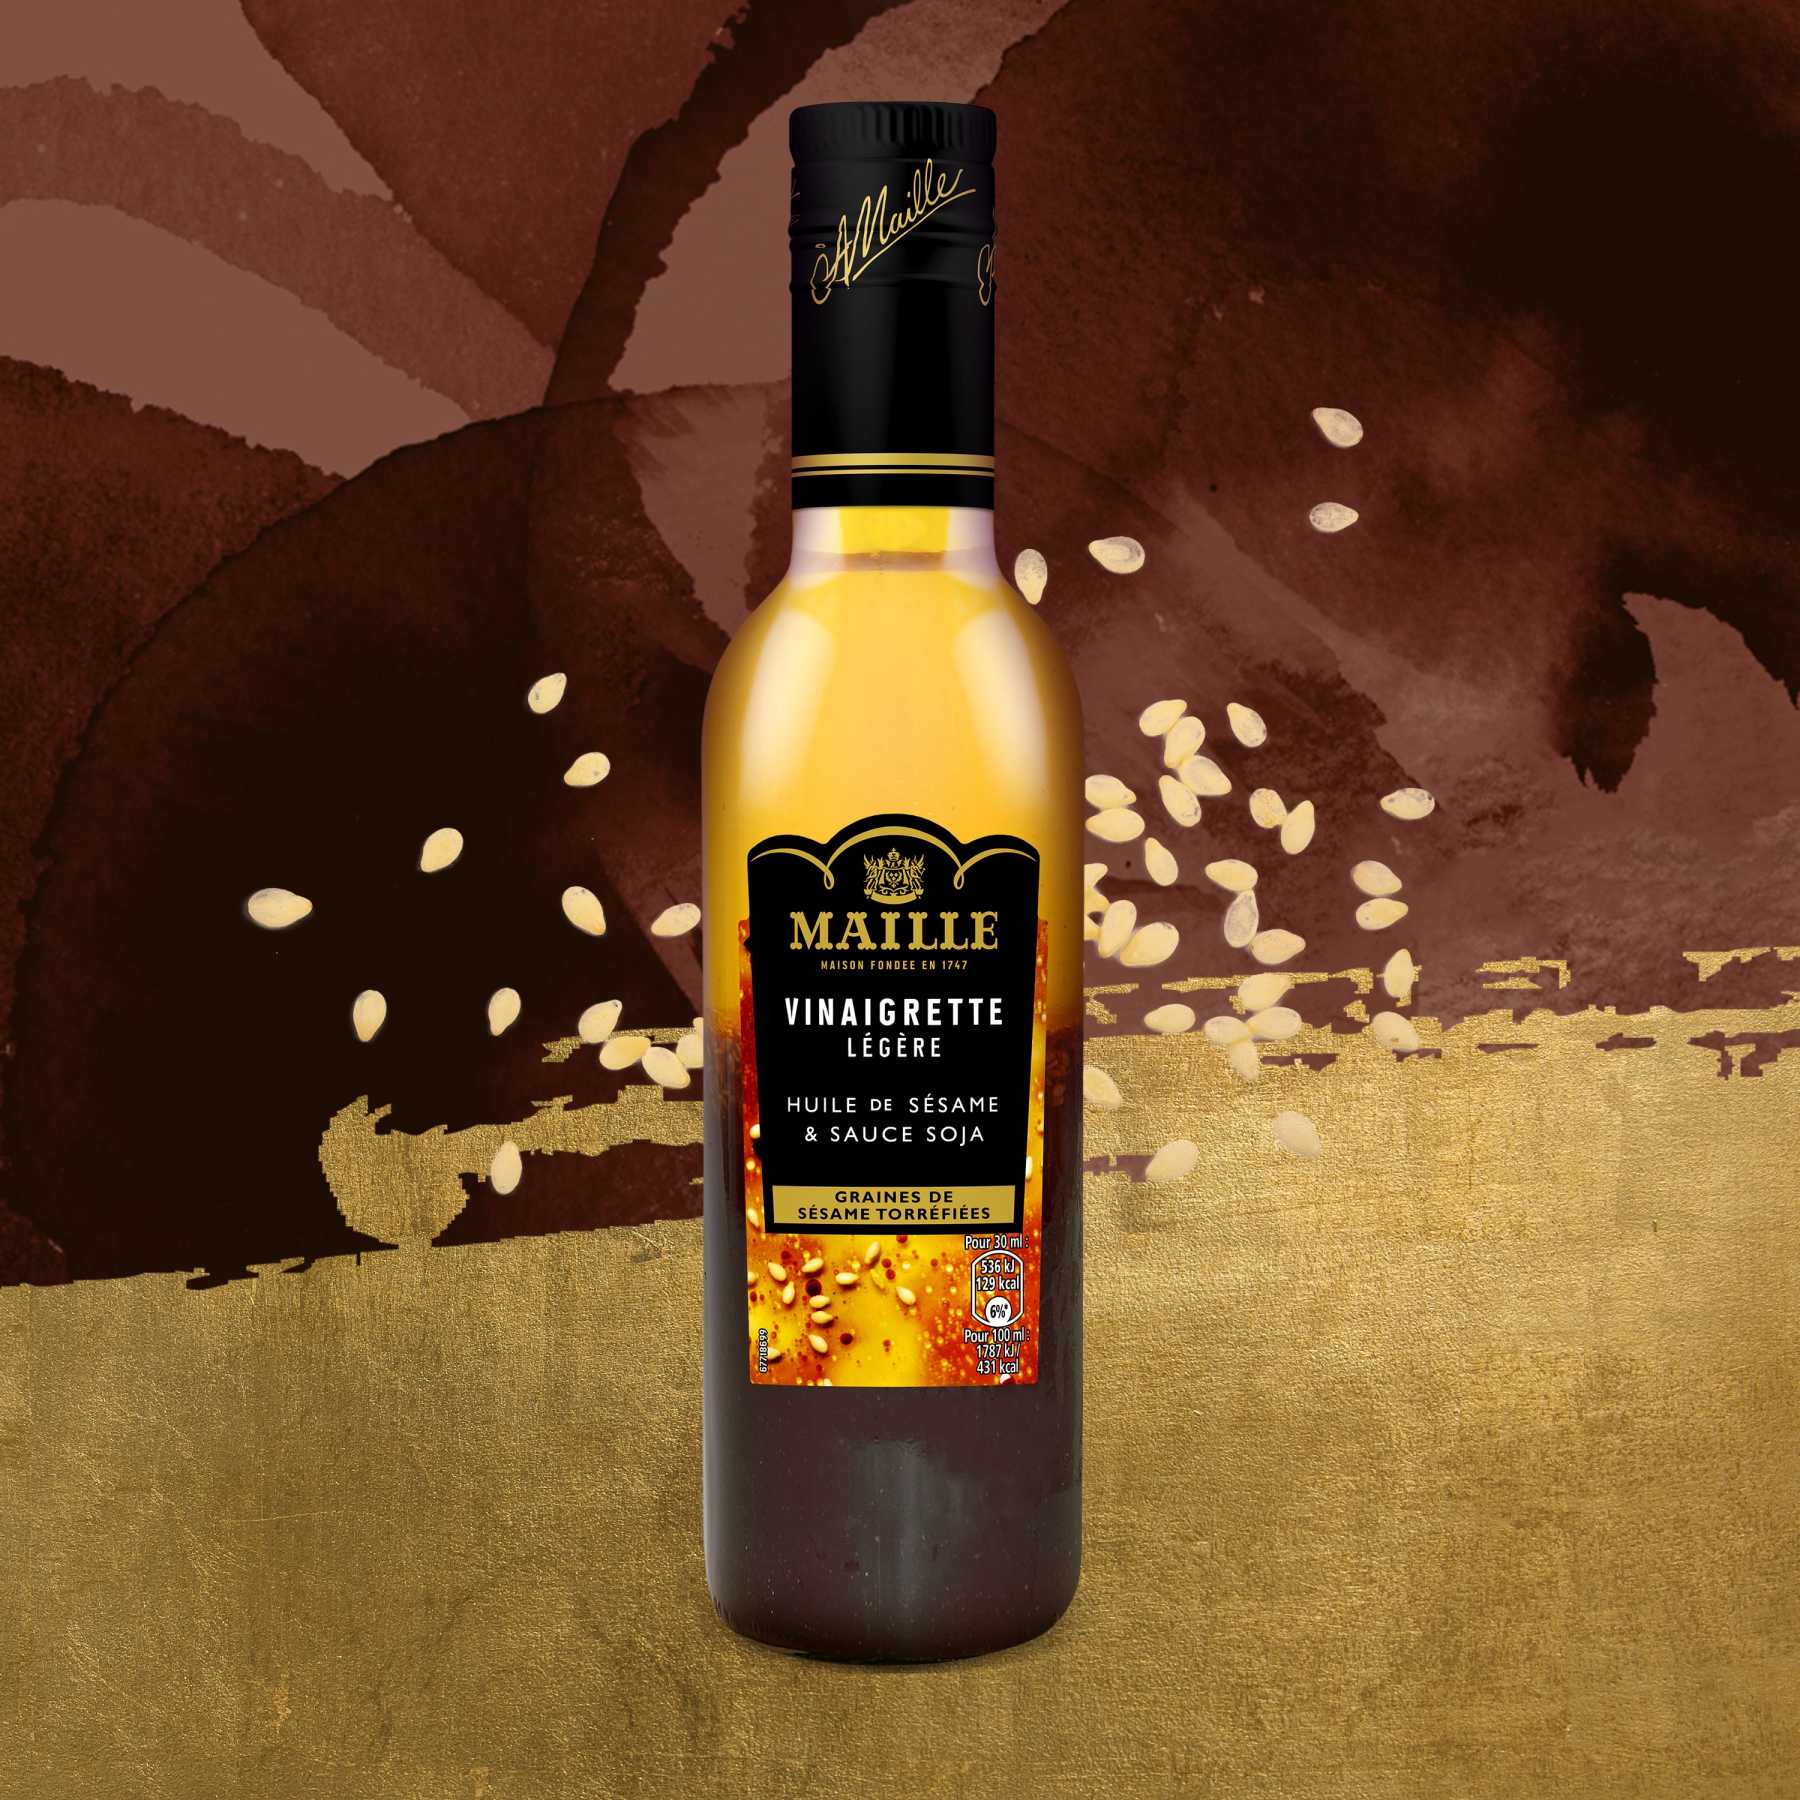 Maille - Vinaigrette huile de sesame & sauce soja graines de sesame torrefiees, 360 ml, new visual